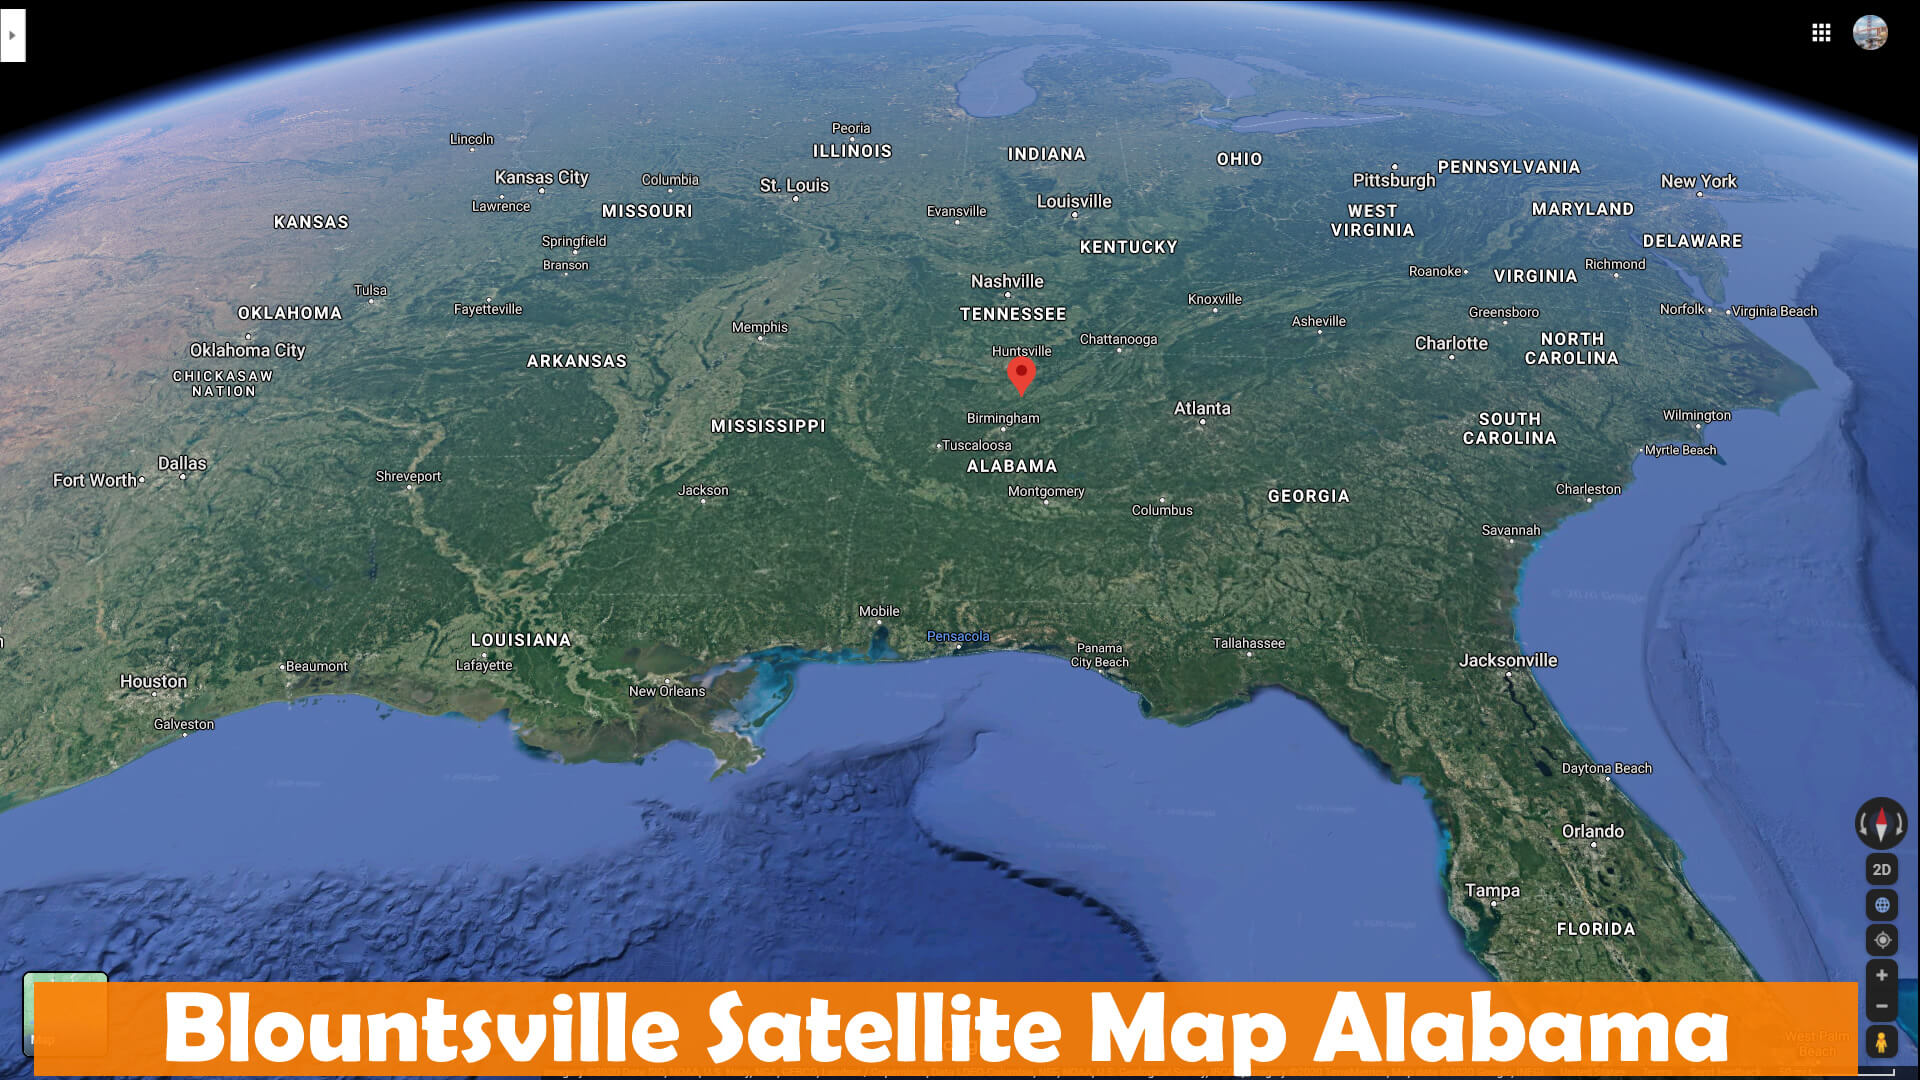 Blountsville Satellite Map Alabama